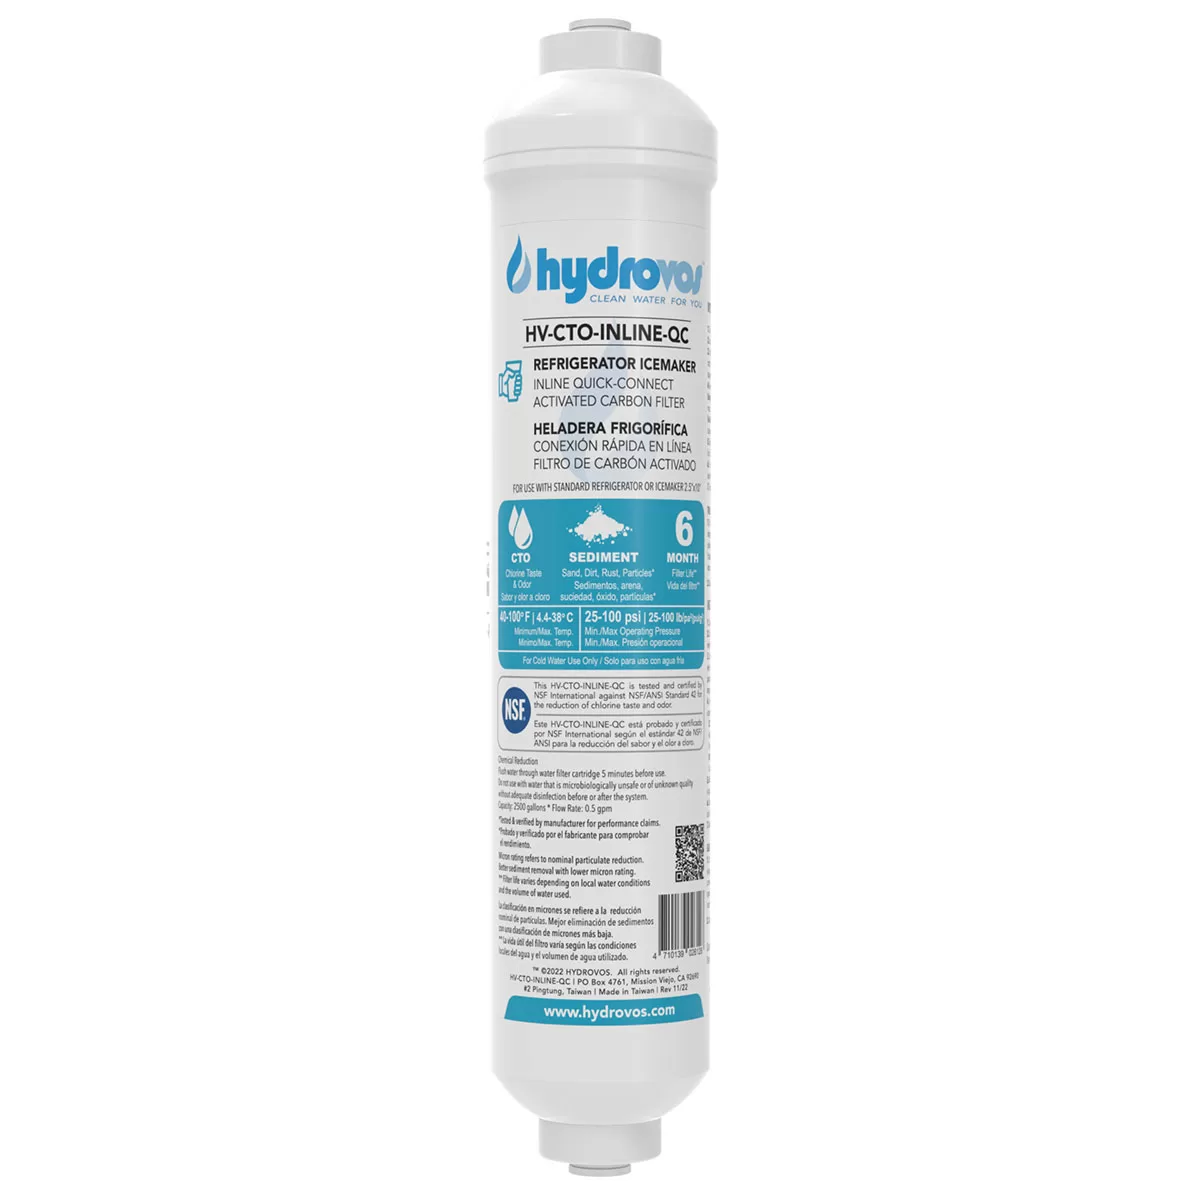 Hydrovos HV-CTO-INLINE QC kitchen water filter